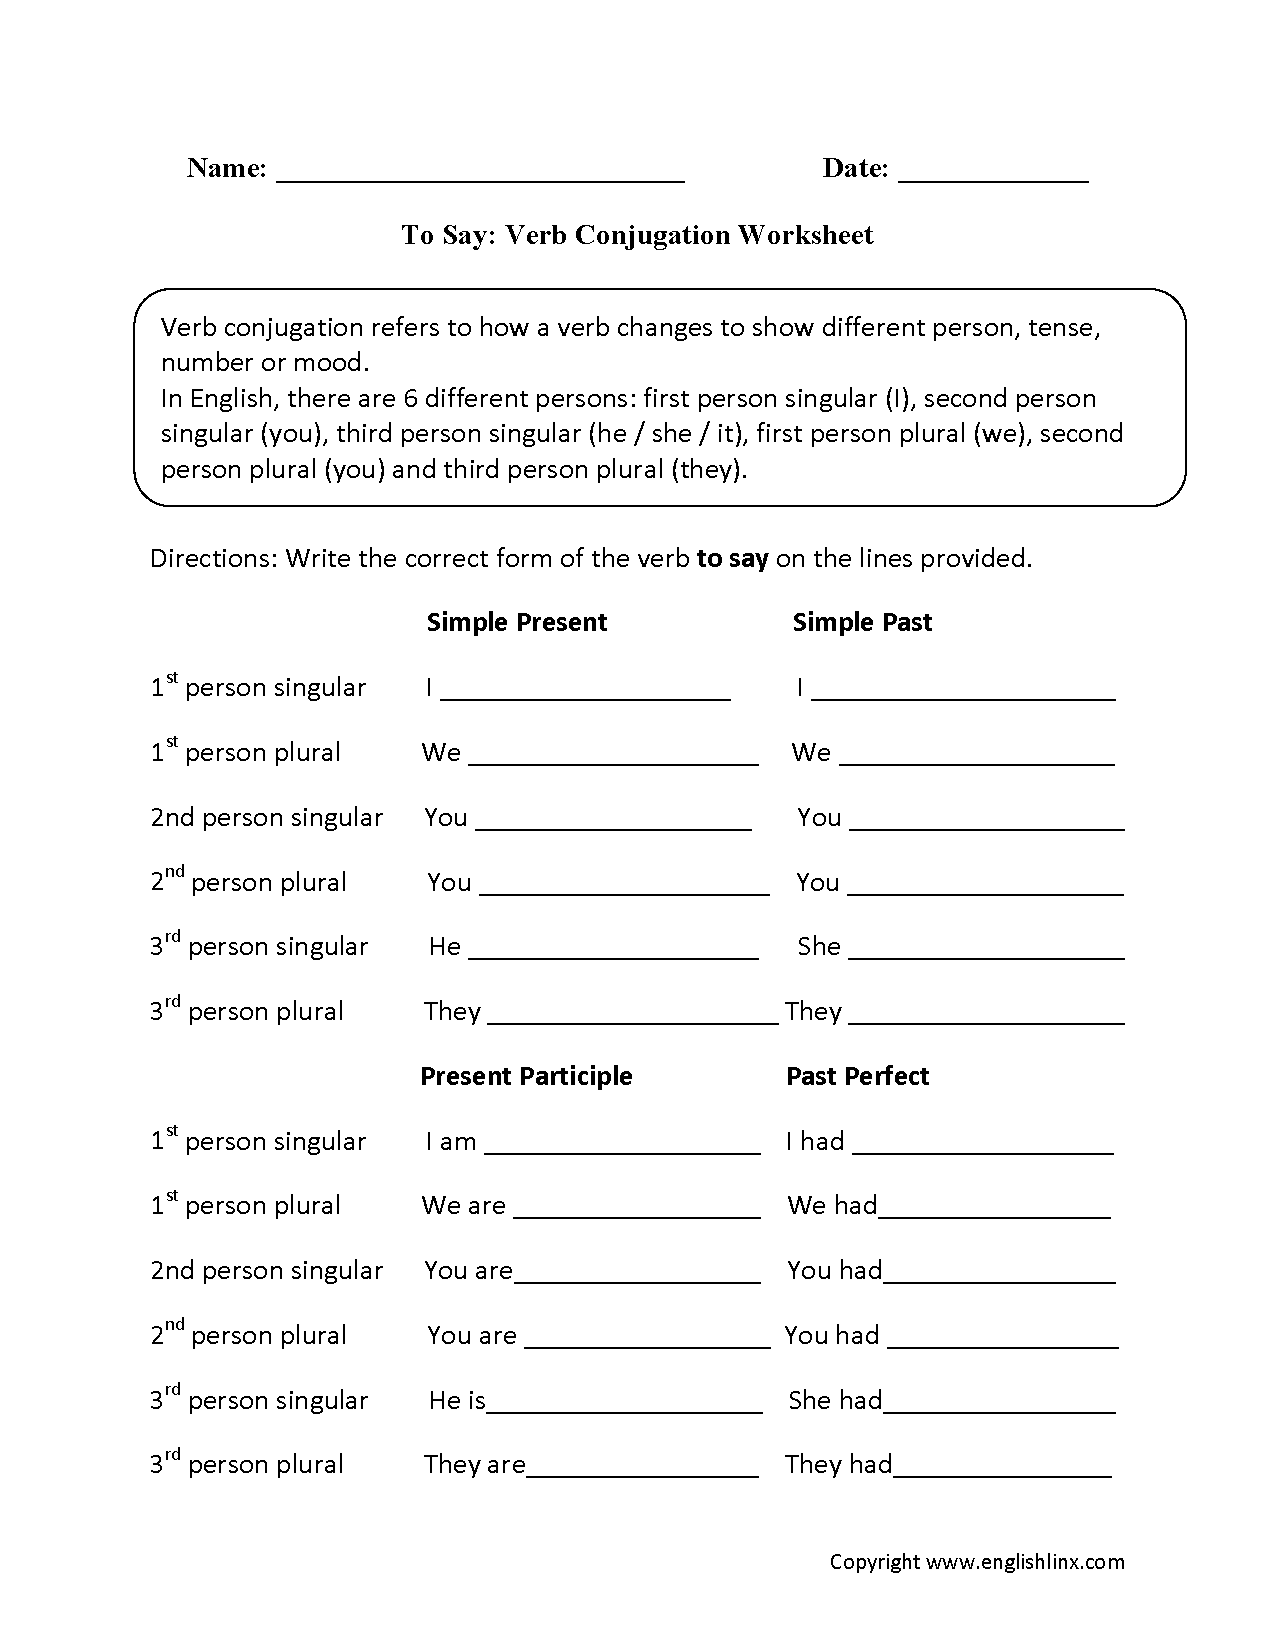 To Say Verb Conjugation Worksheets